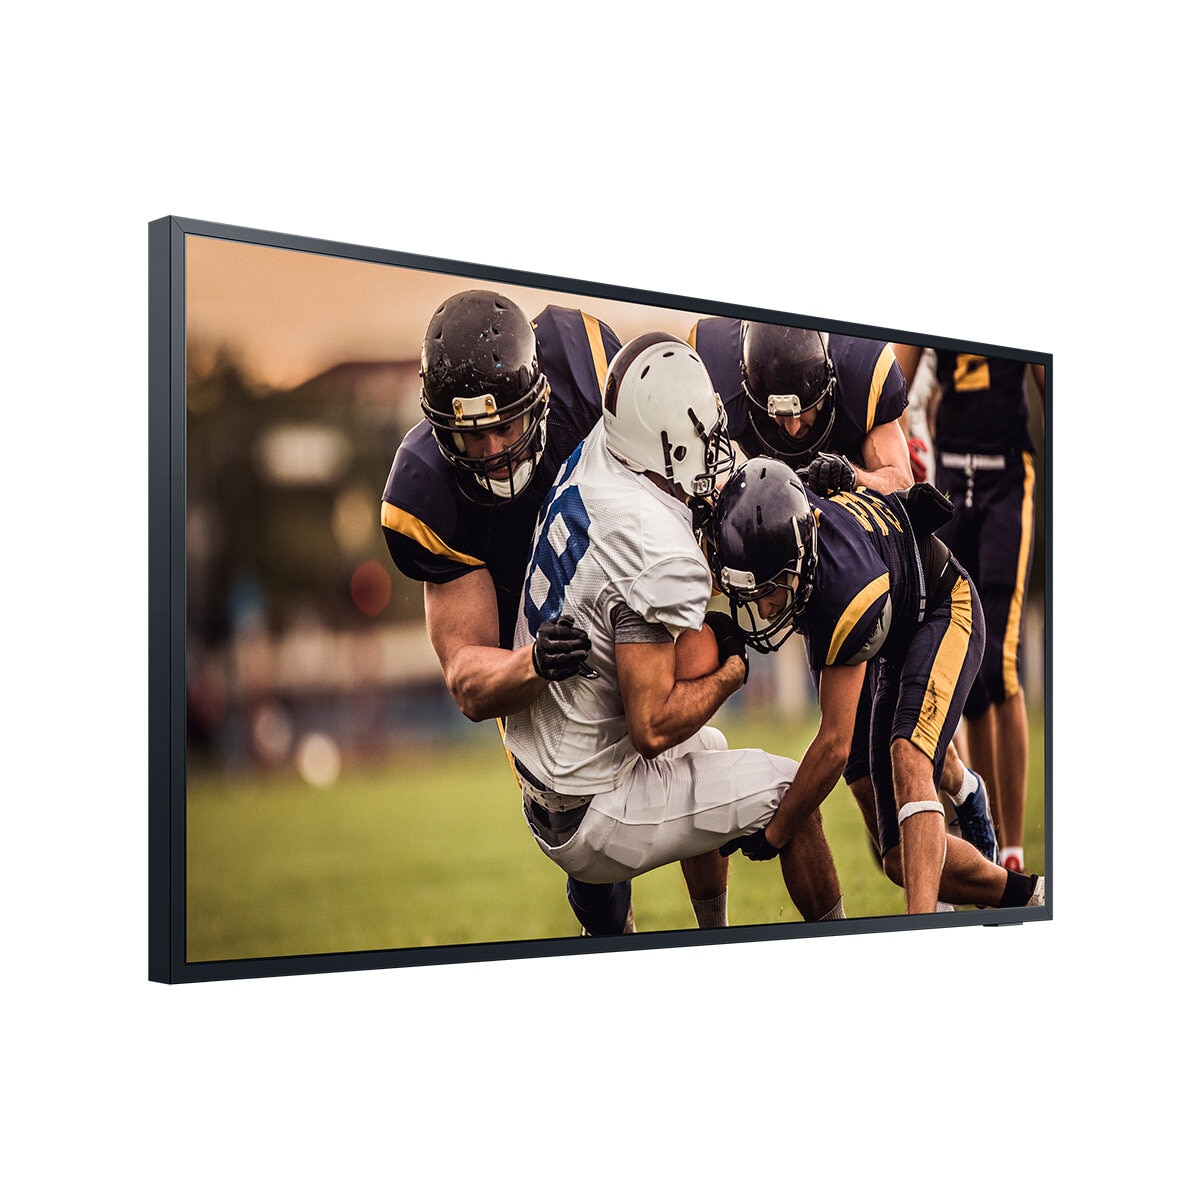 Samsung Pantalla 65" QLED TERRACE 4K Smart TV para exteriores